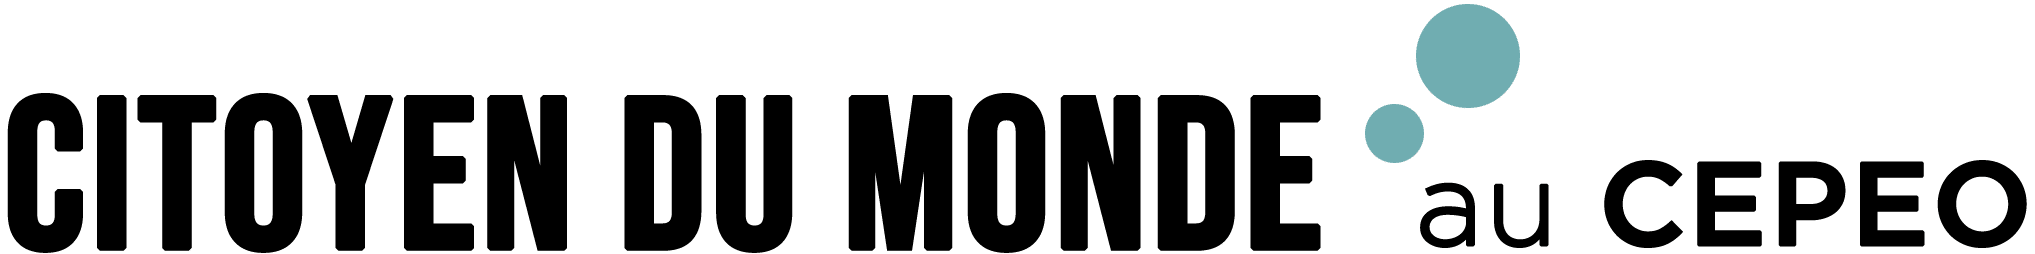 Citoyen-du-monde_logo-1.png